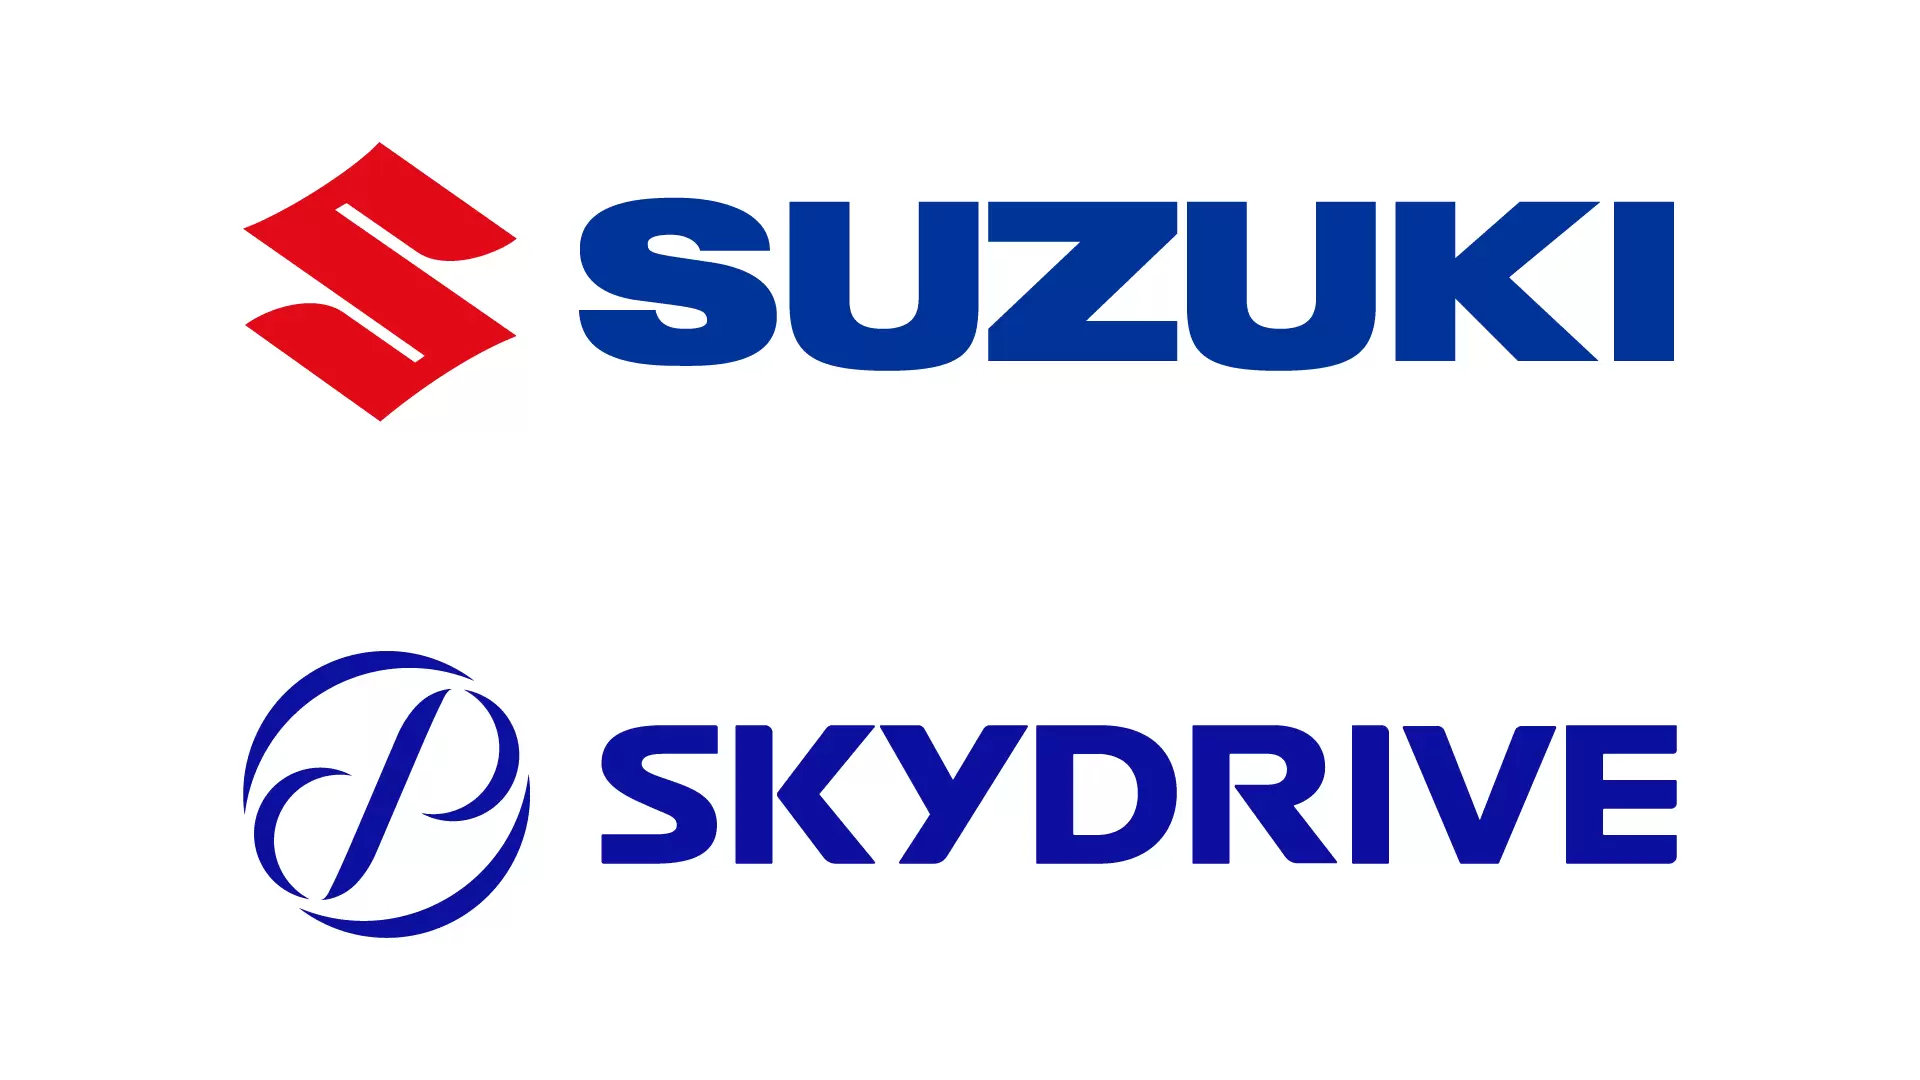 Suzuki Skydrive